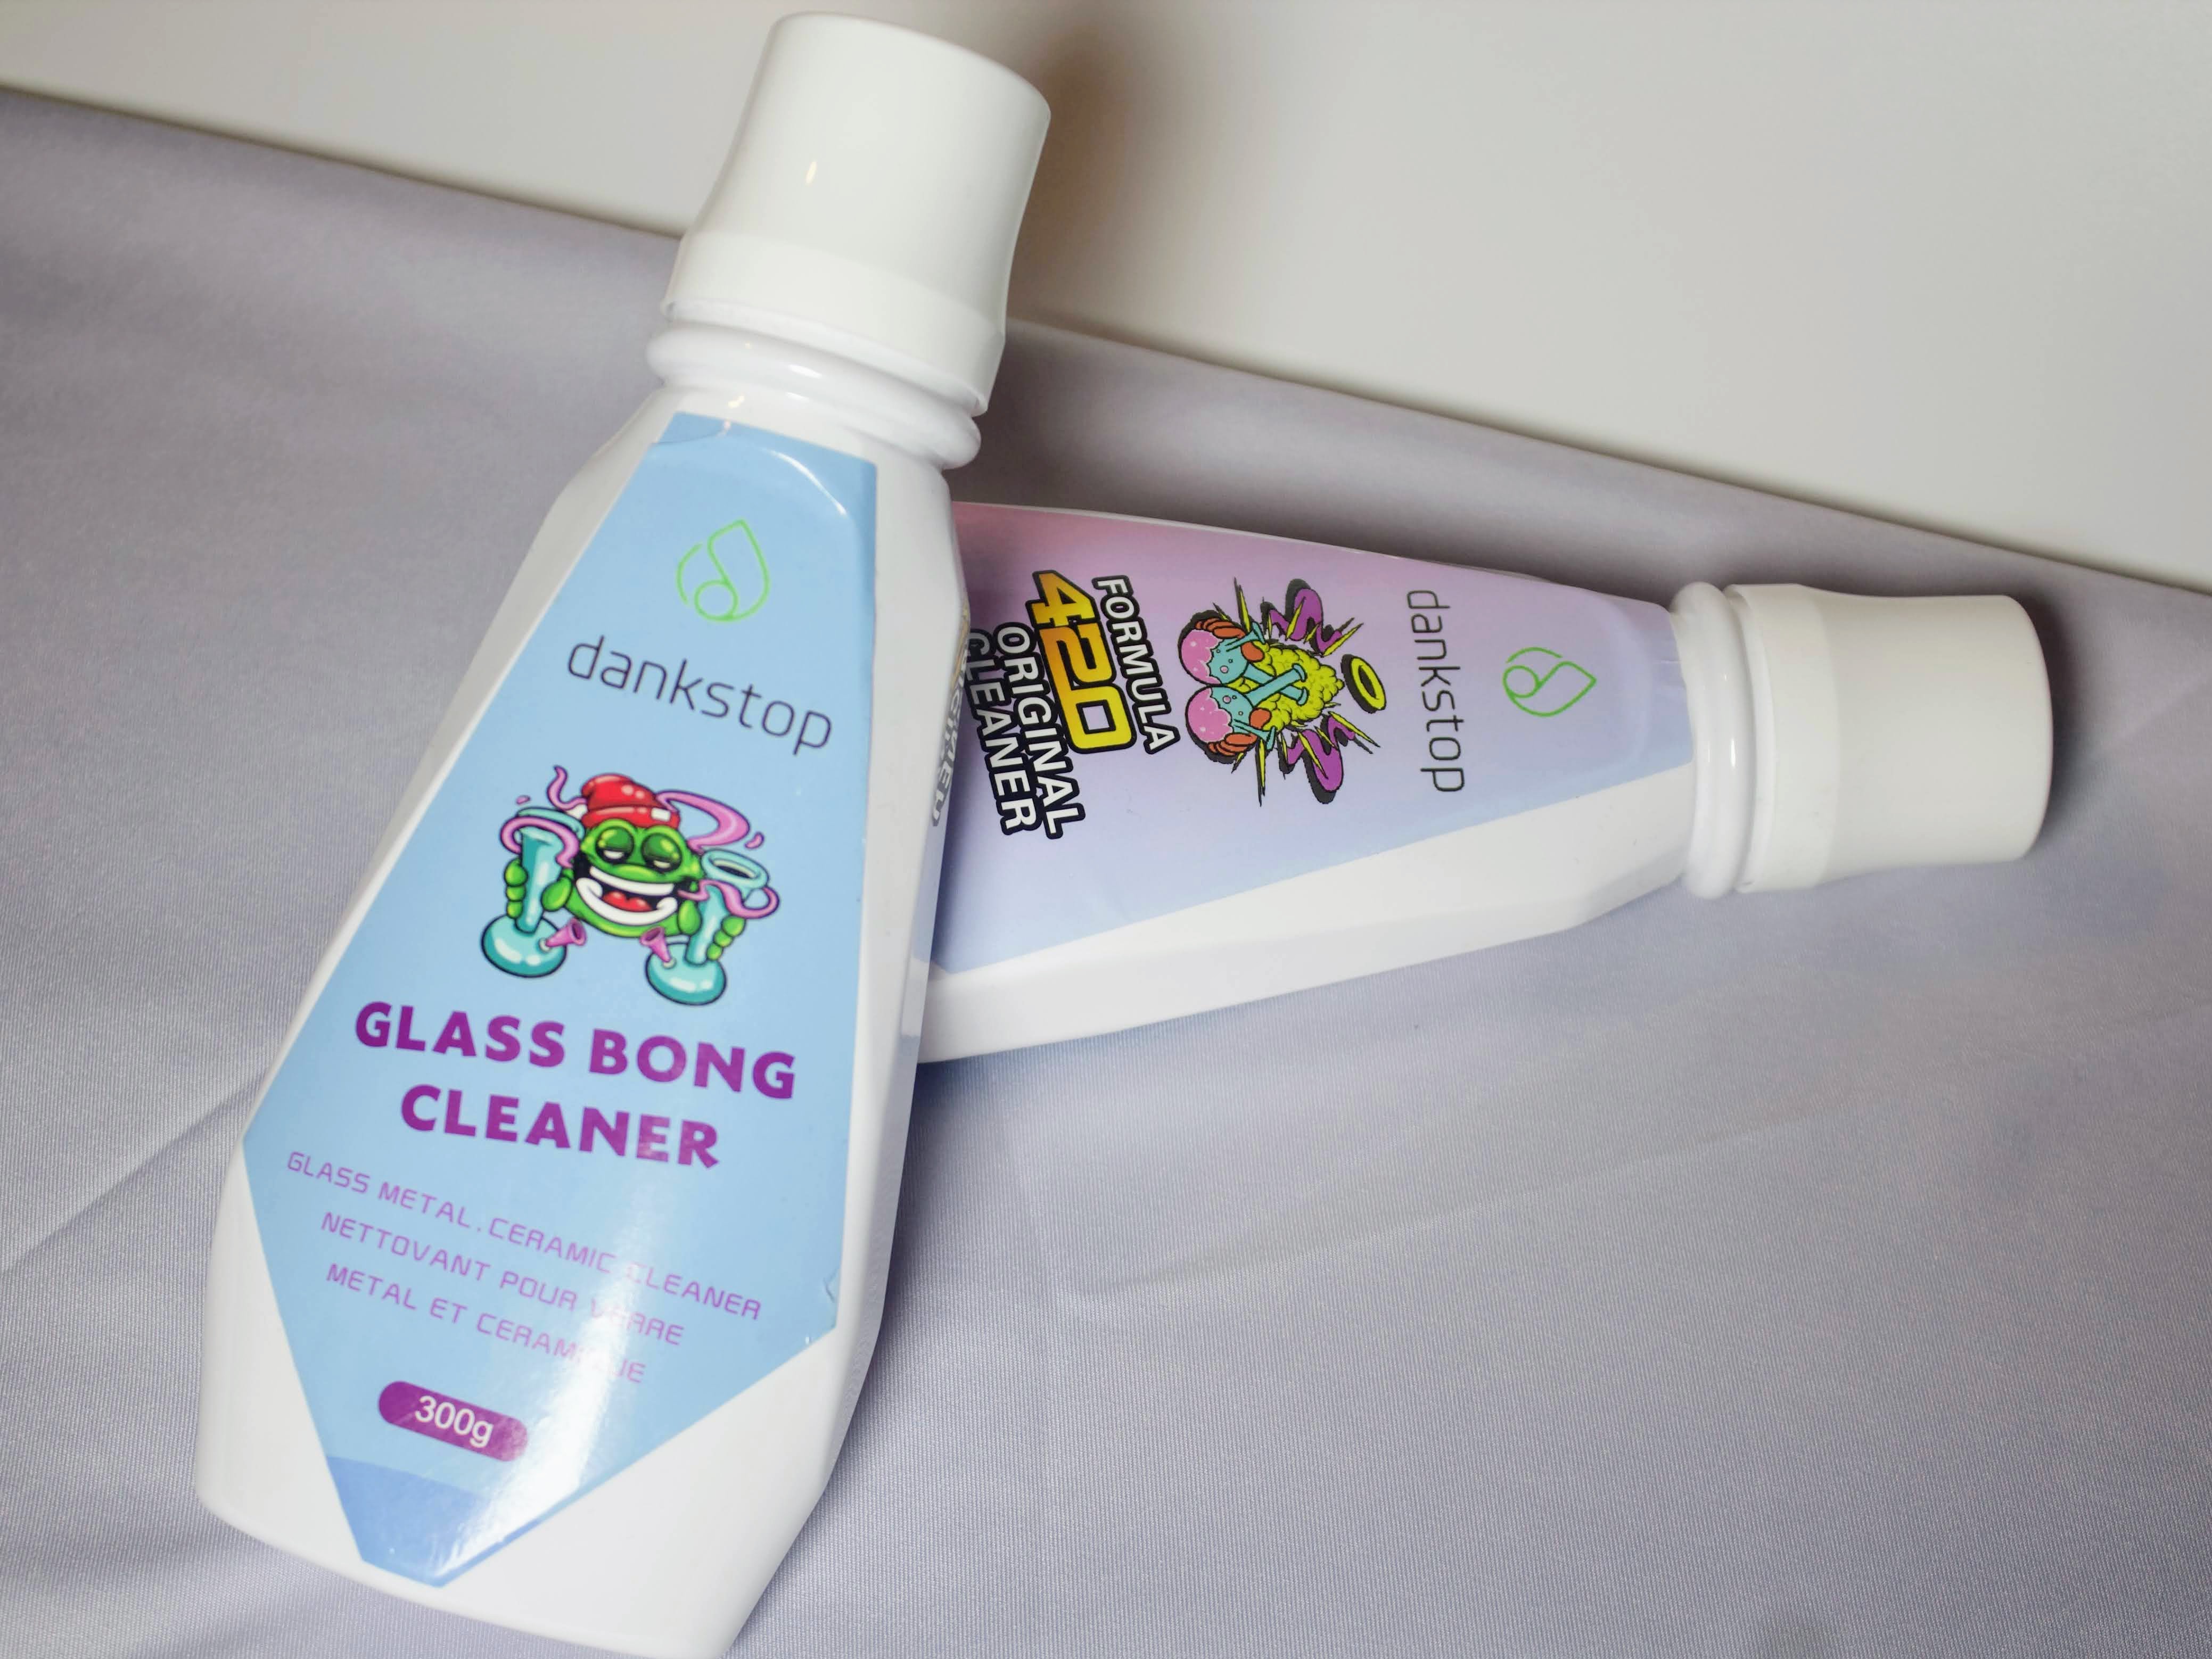 Glass bong cleaner